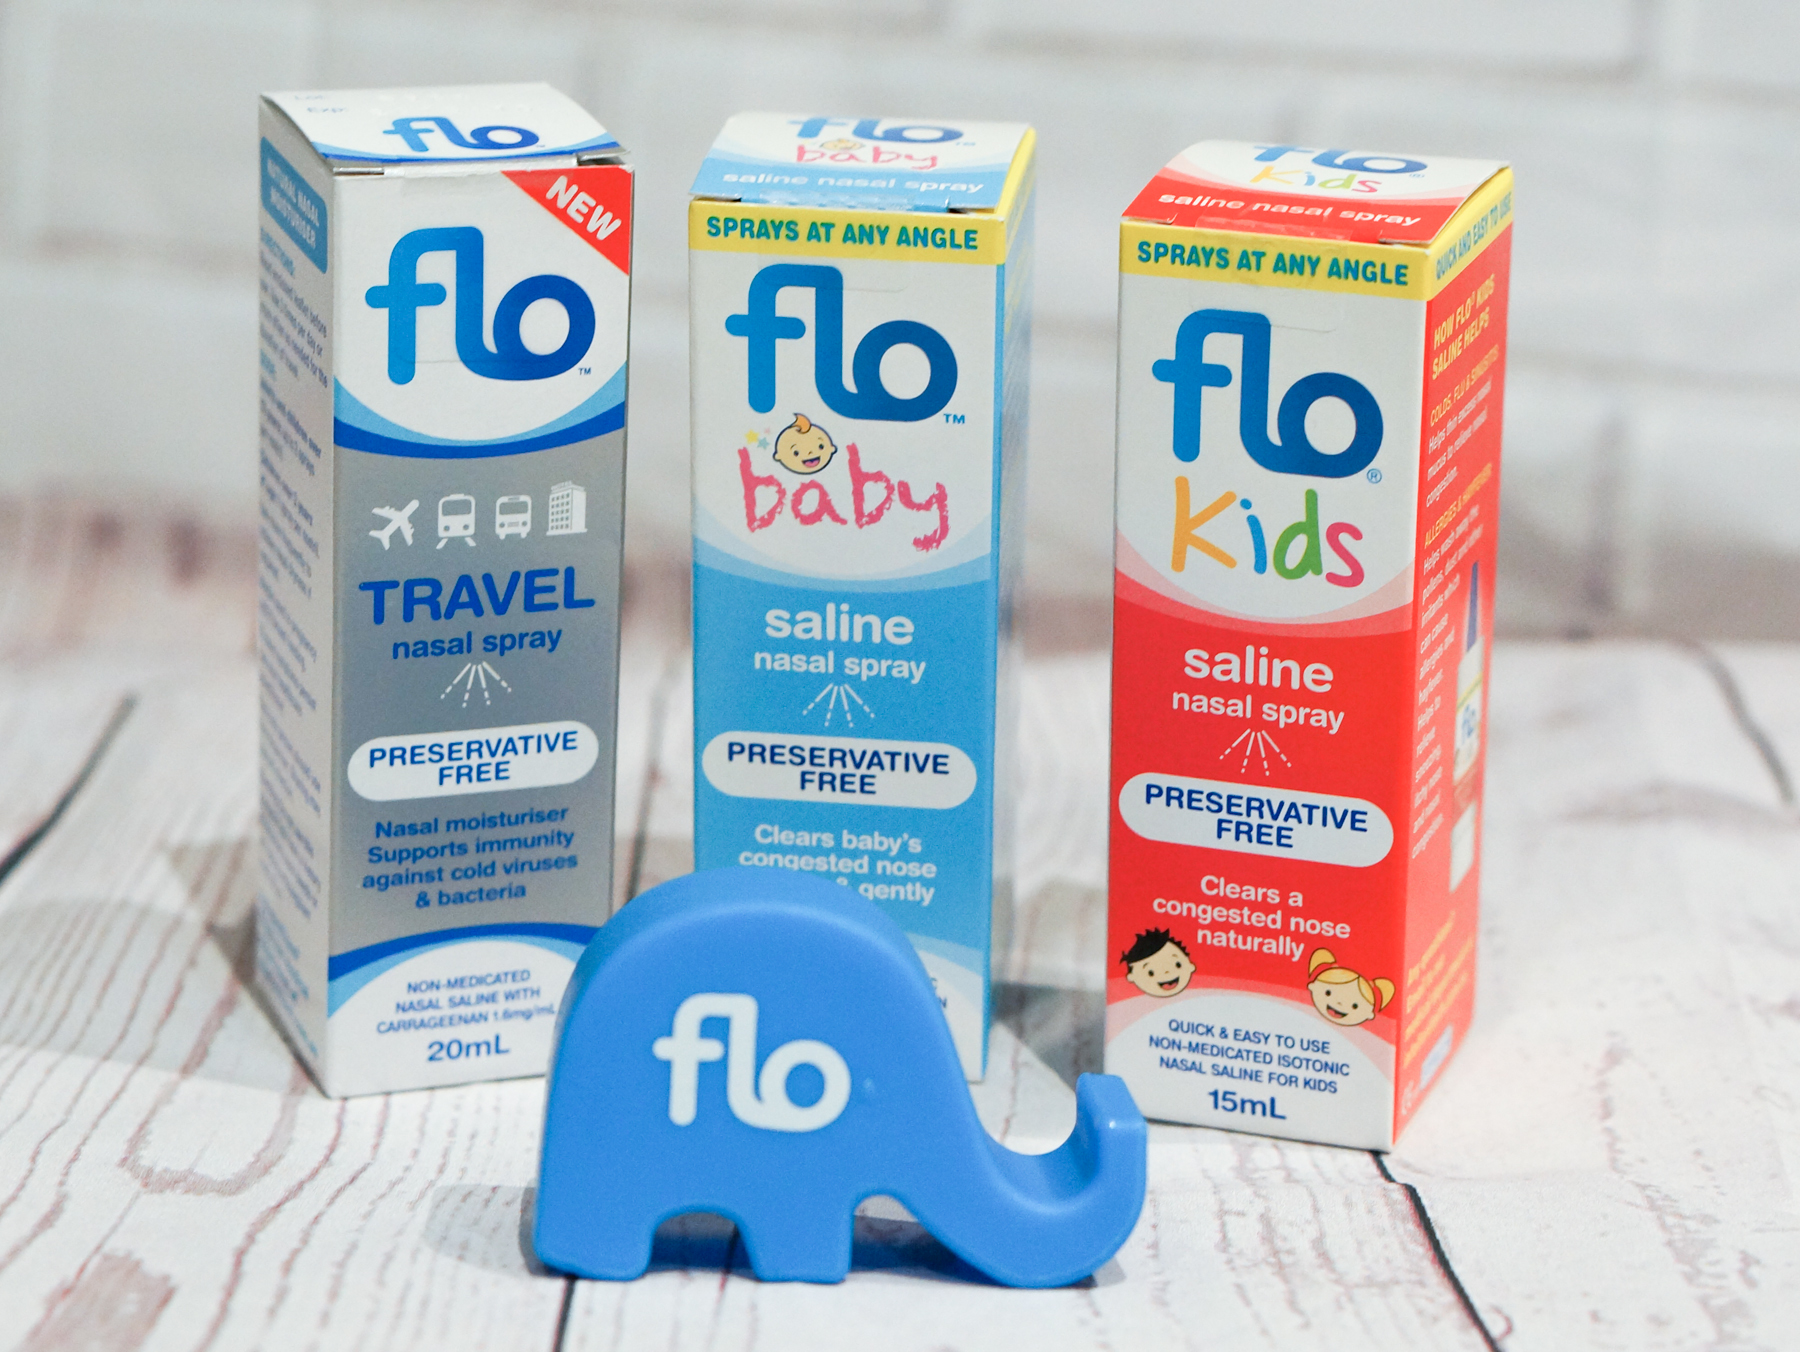 flo baby saline nasal spray